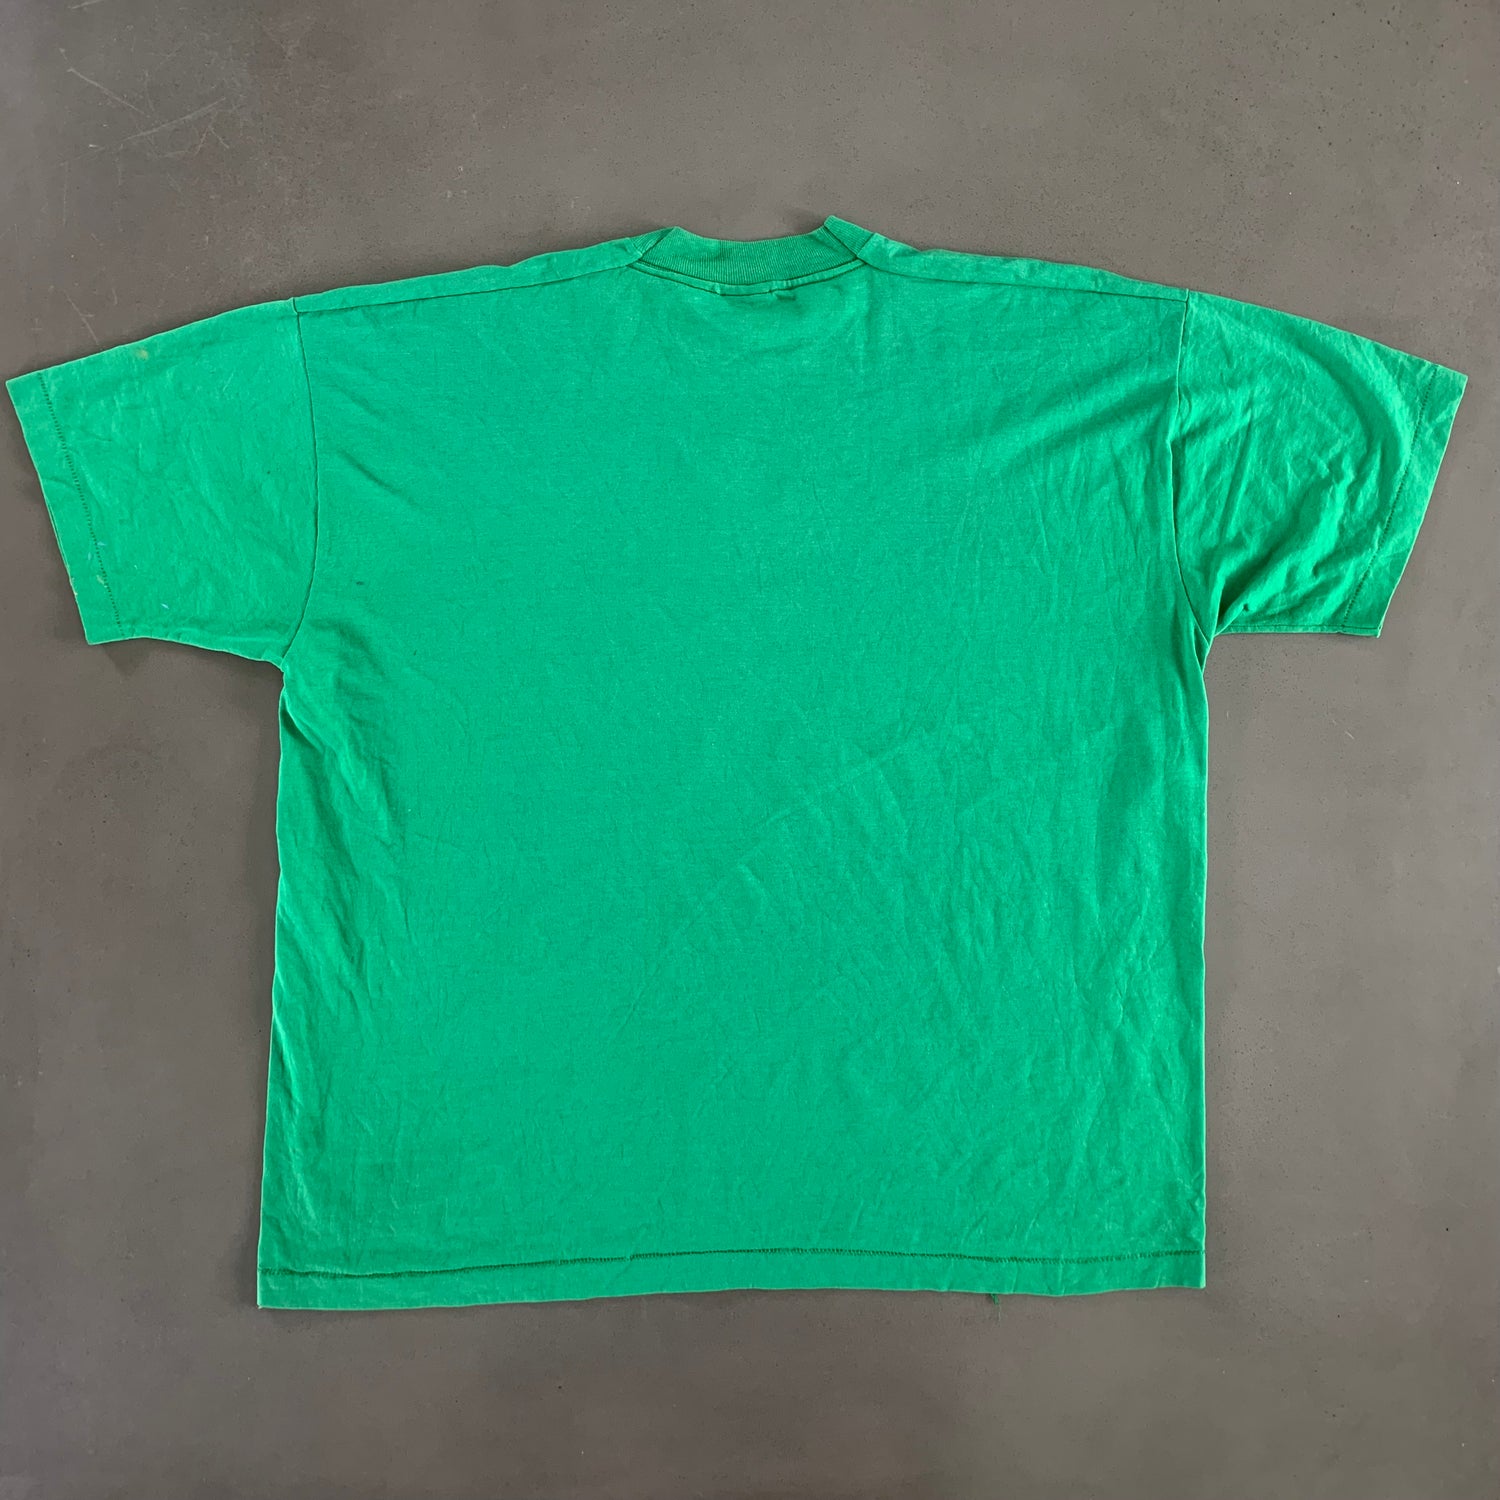 Vintage 1990s Missouri T-shirt size XXL